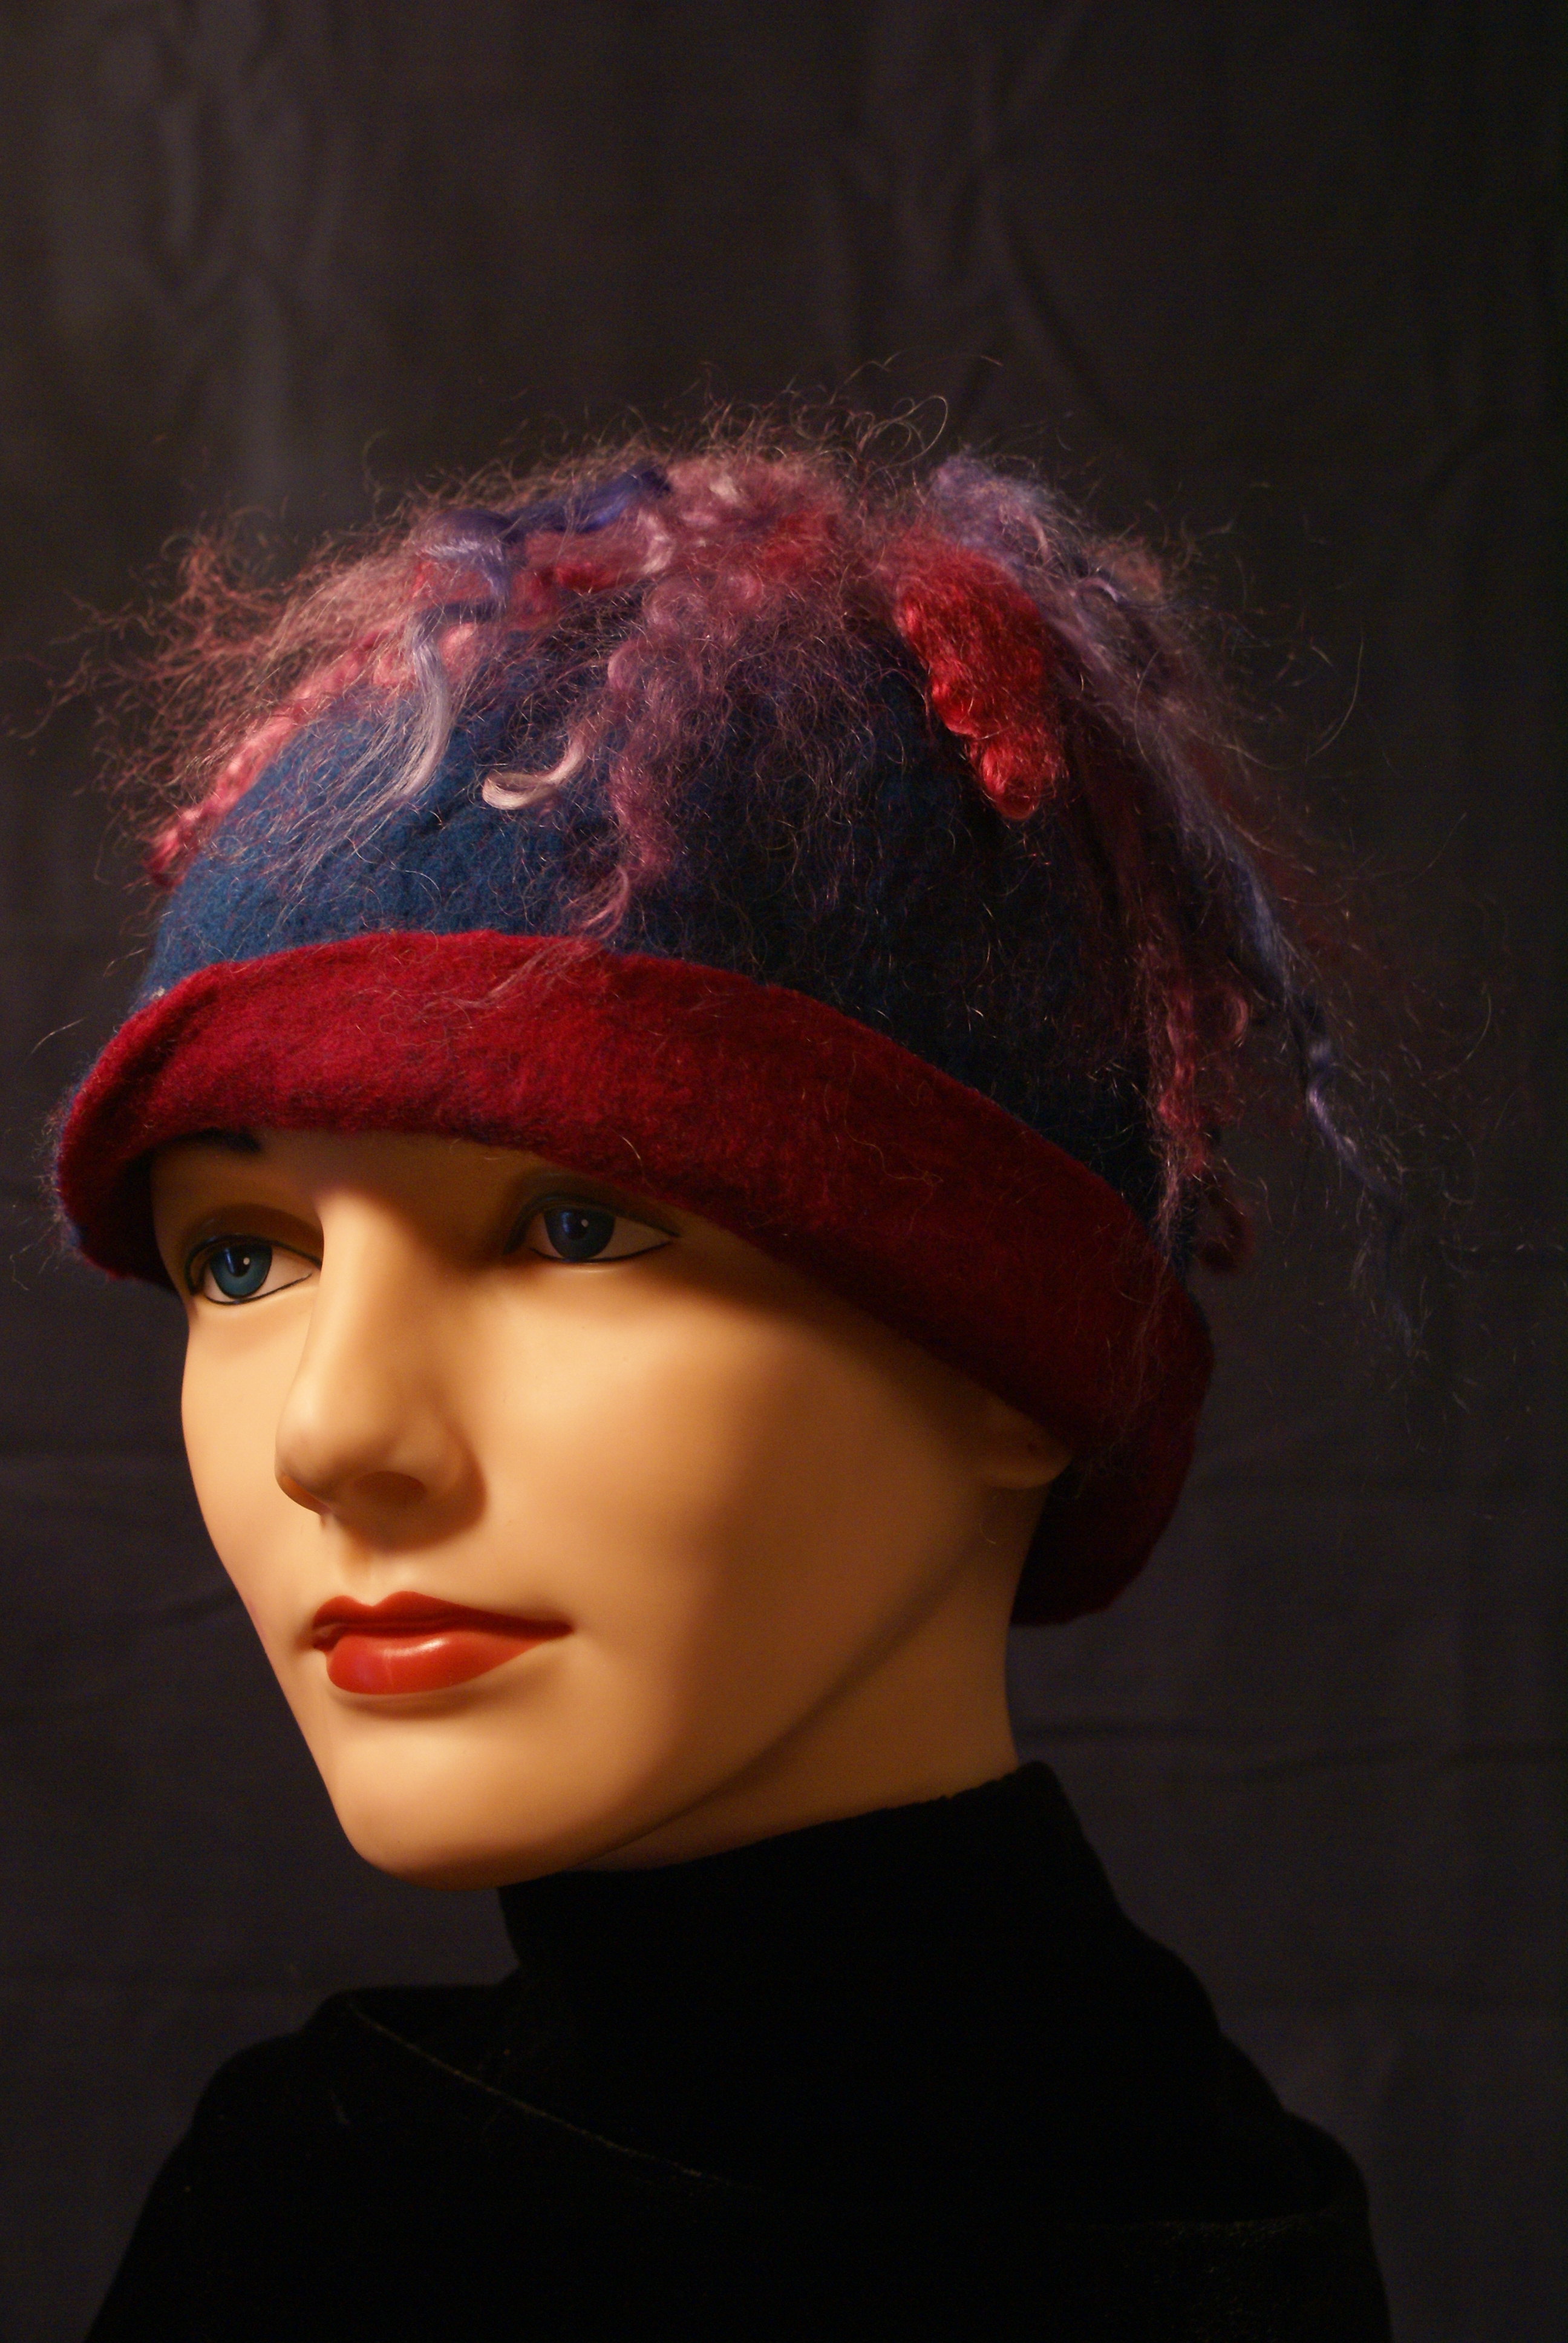 Felt hat, teal shag by Betty Kirk - photo by Jim Kirk - dsc00500